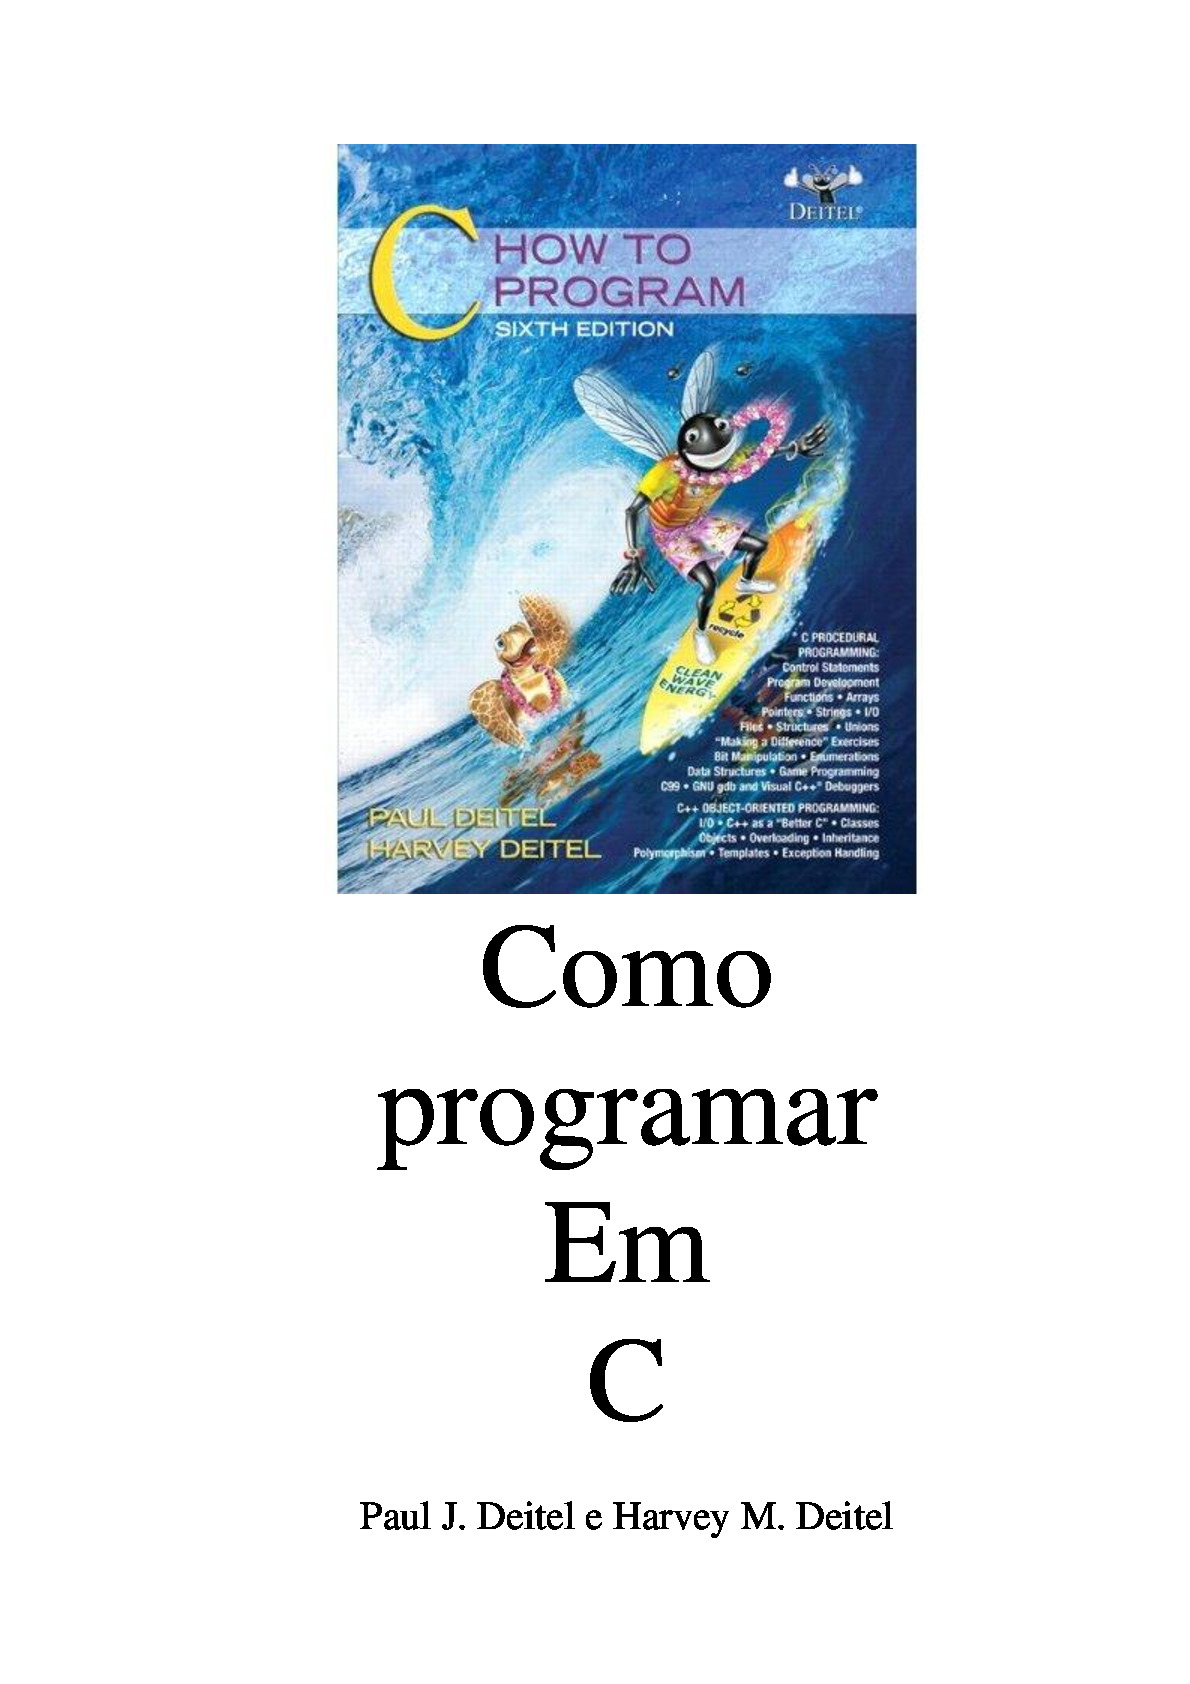 C como programar 6a ed (C how to program) – Deitel & Deitel